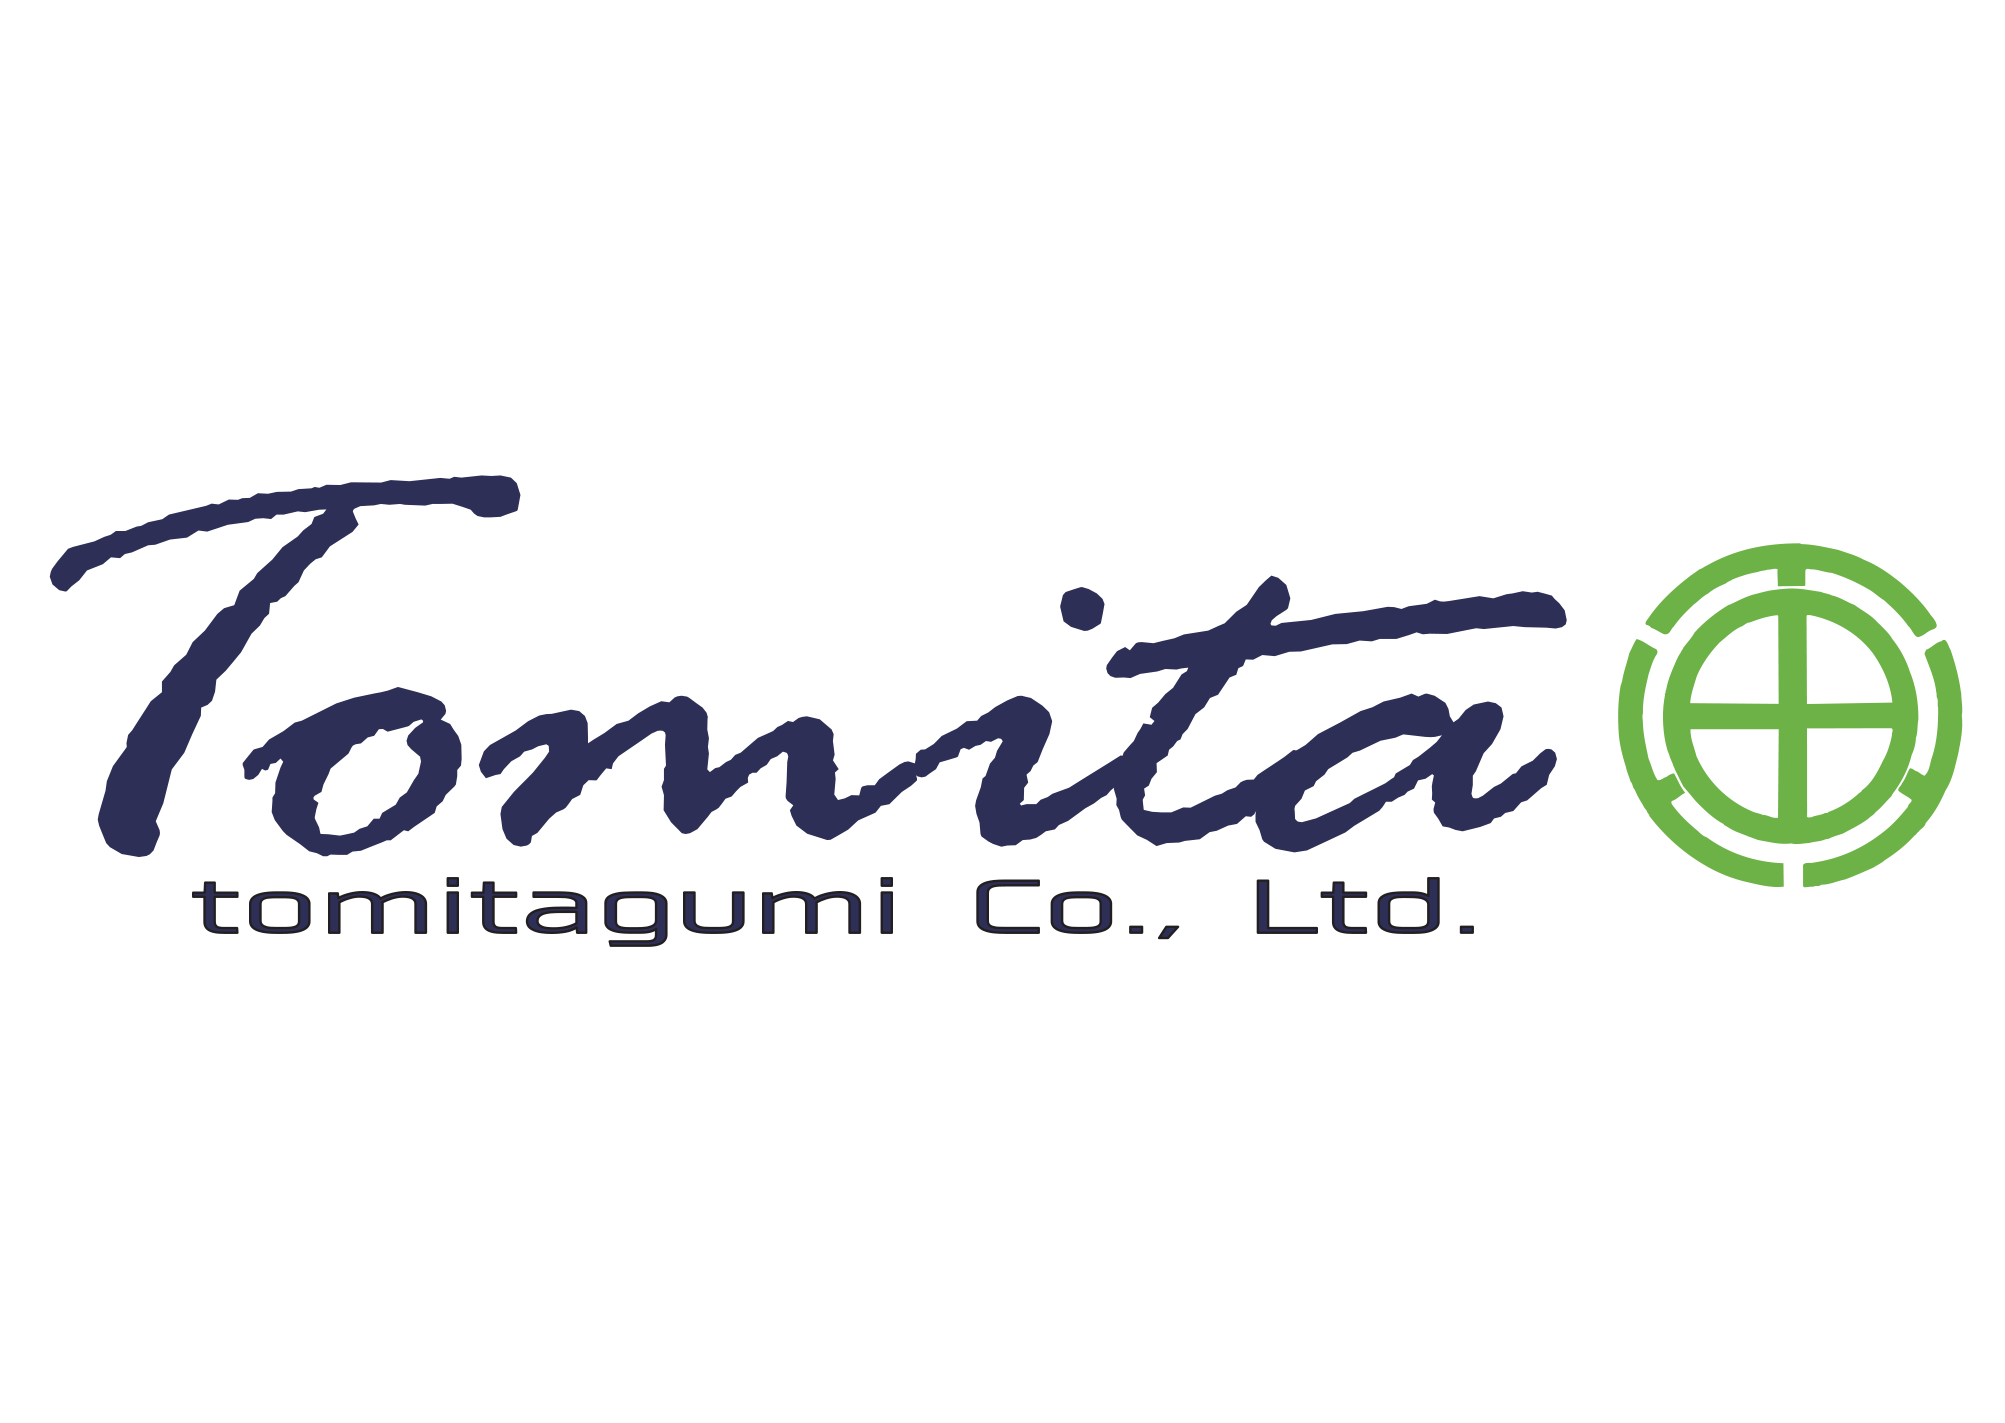 Tomita tomitagumi Co.Ltd.